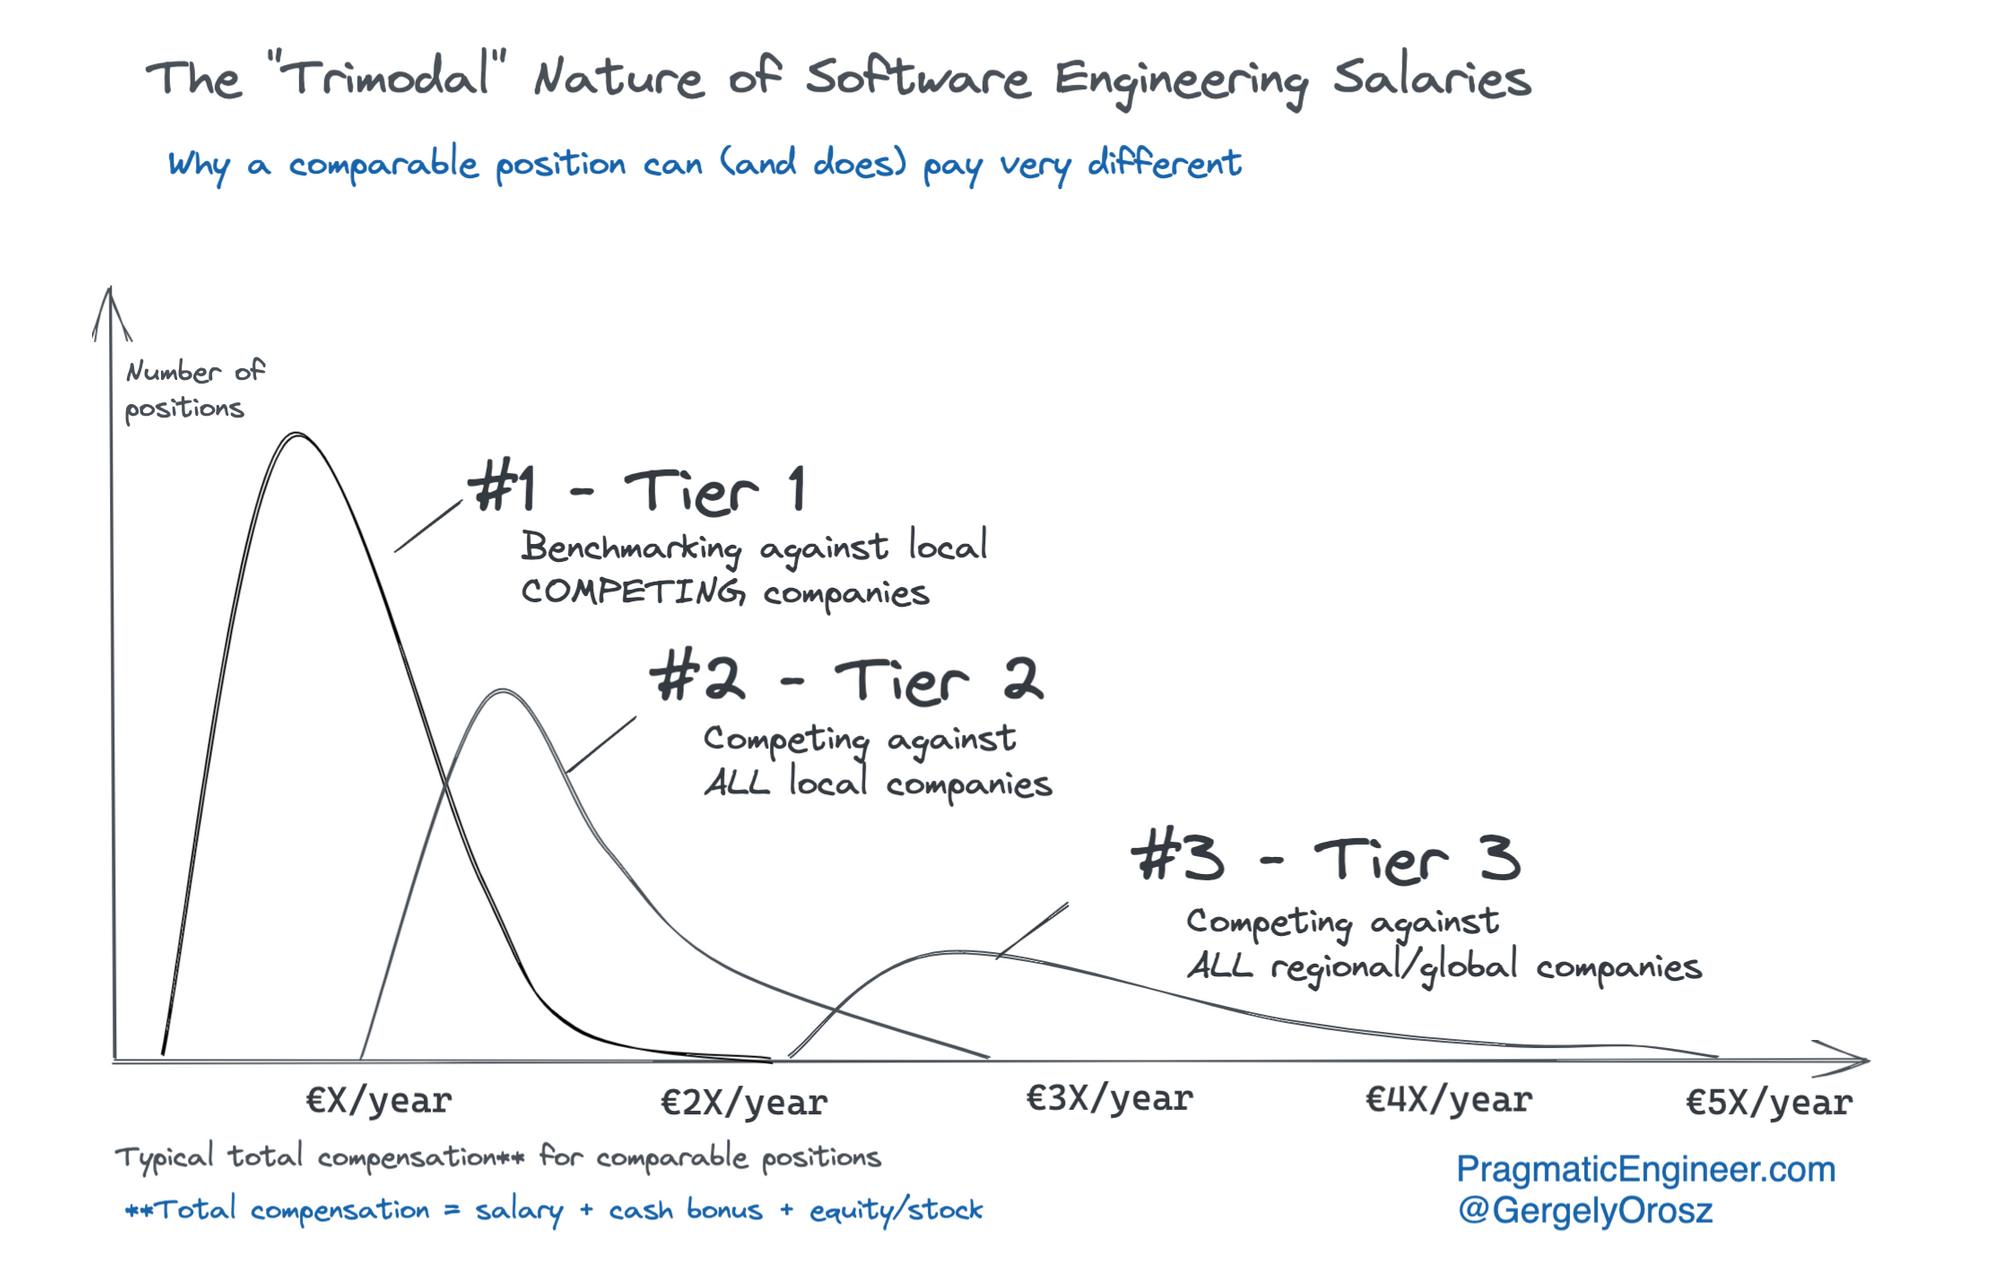 Source: The Pragmatic Engineer - https://blog.pragmaticengineer.com/software-engineering-salaries-in-the-netherlands-and-europe/